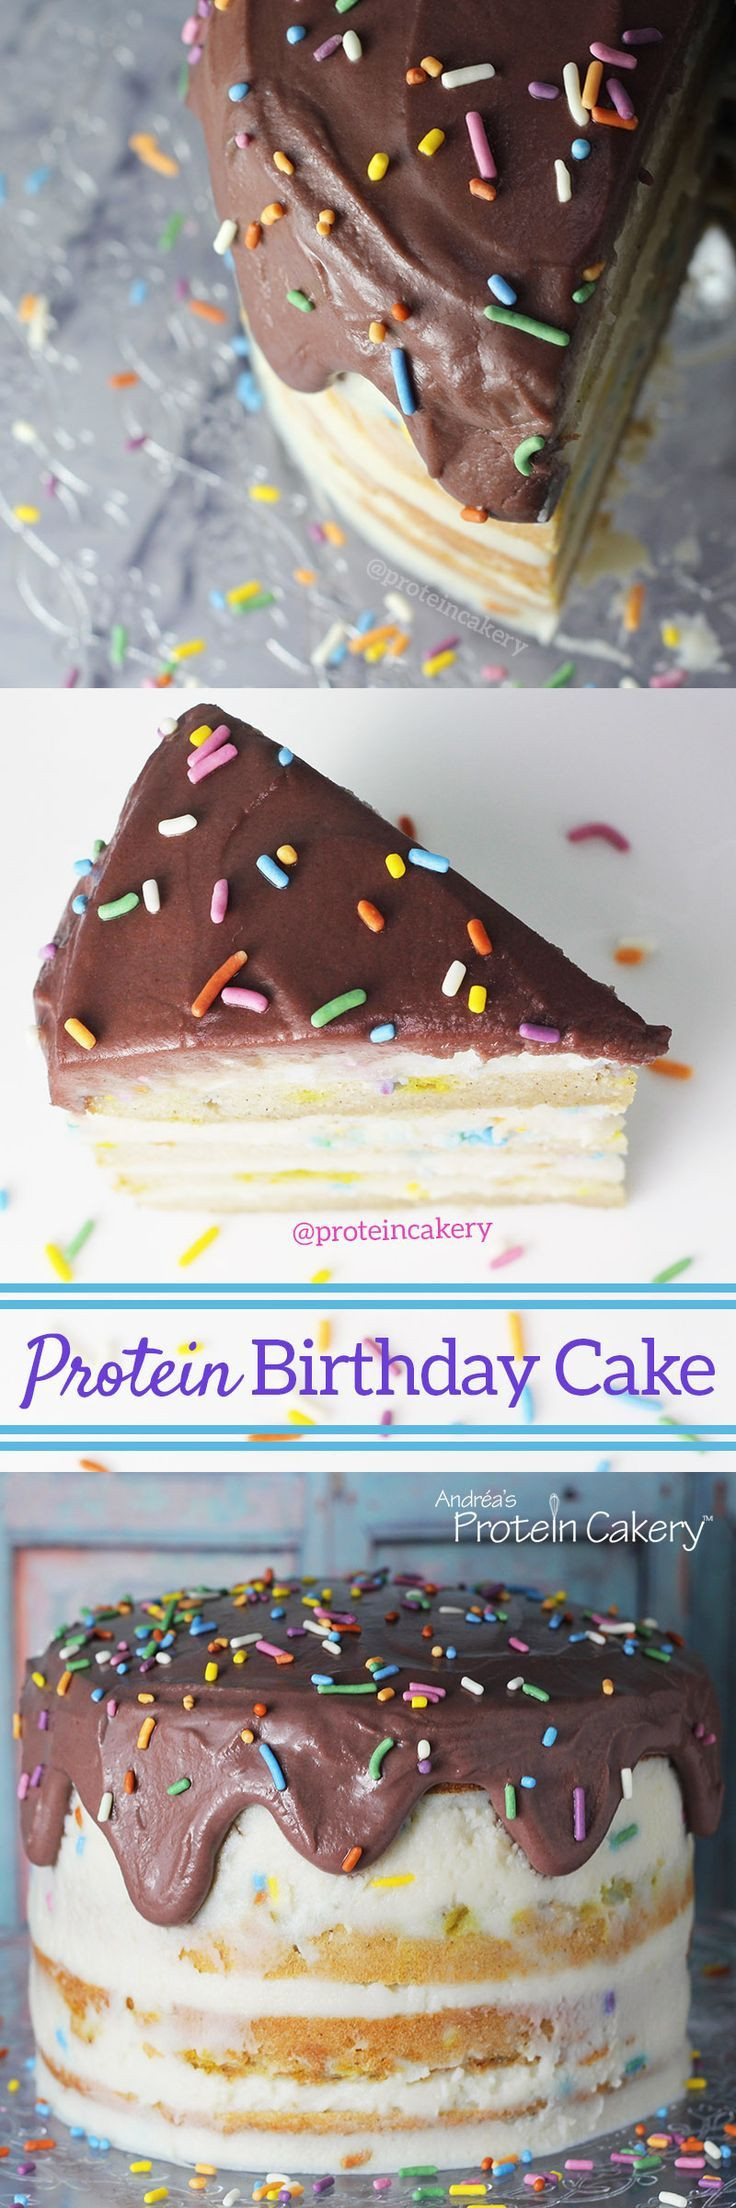 Birthday Cake Protein Powder Recipes
 Protein Birthday Cake Recipe